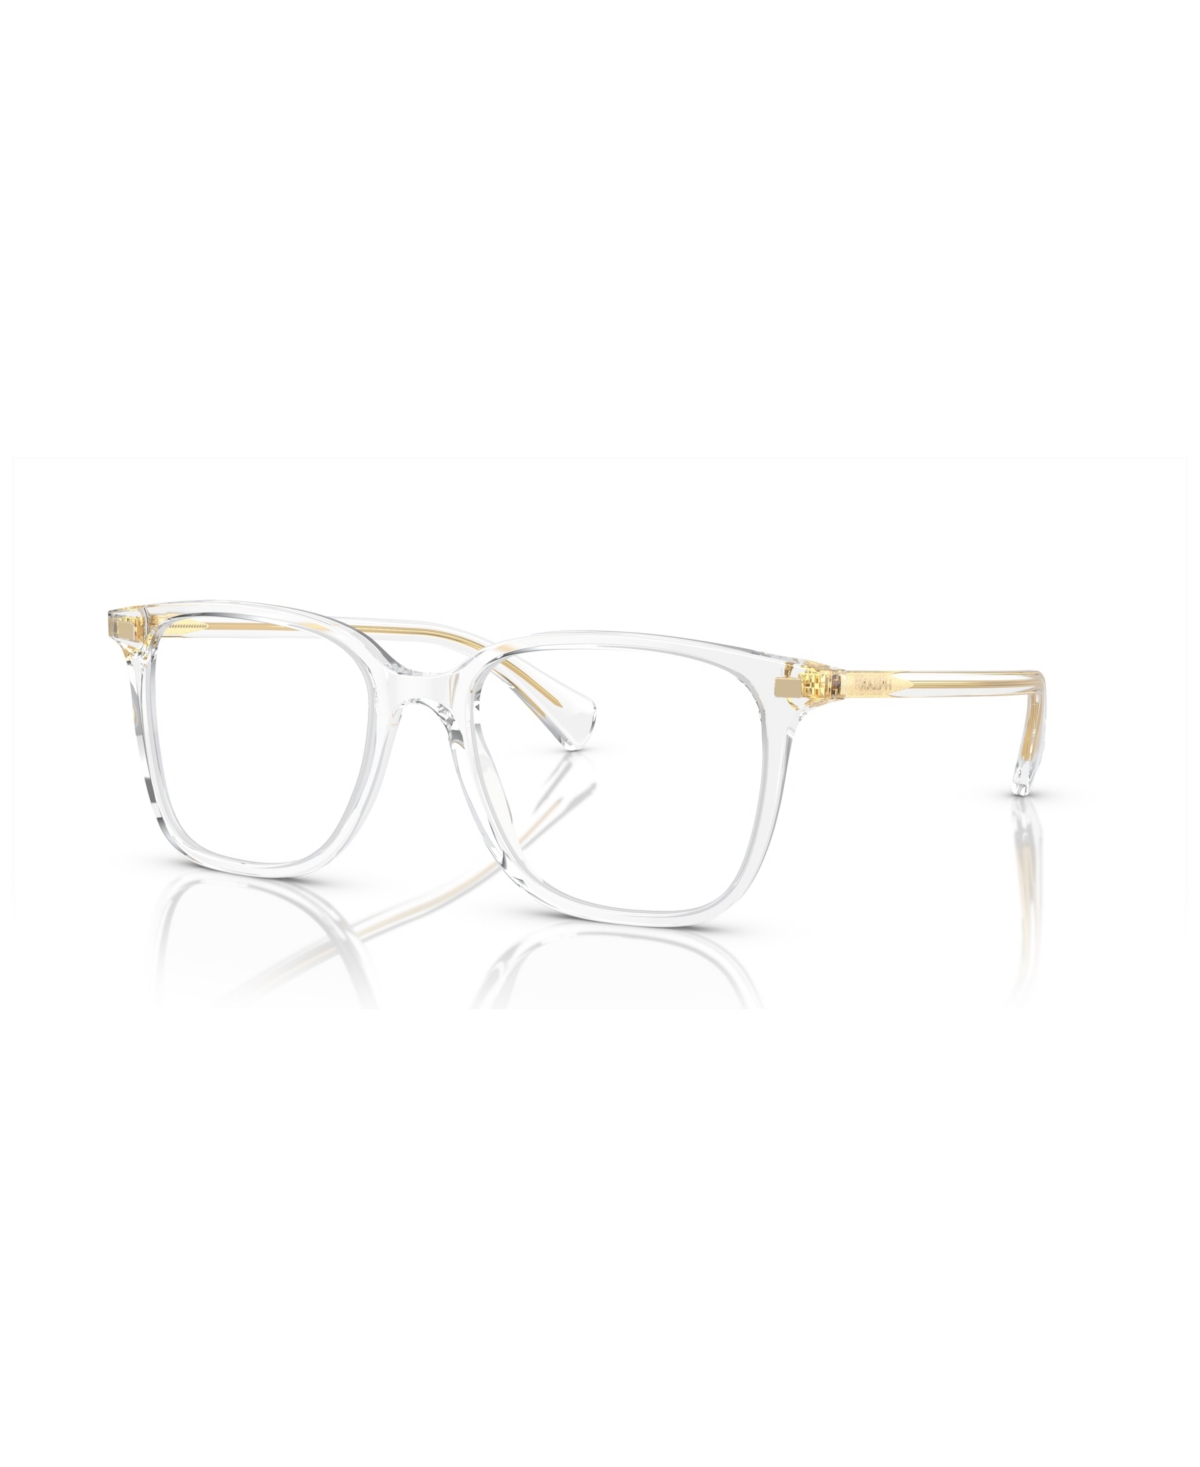 Women's Eyeglasses, RA7147 - Shiny Transparent Crystal